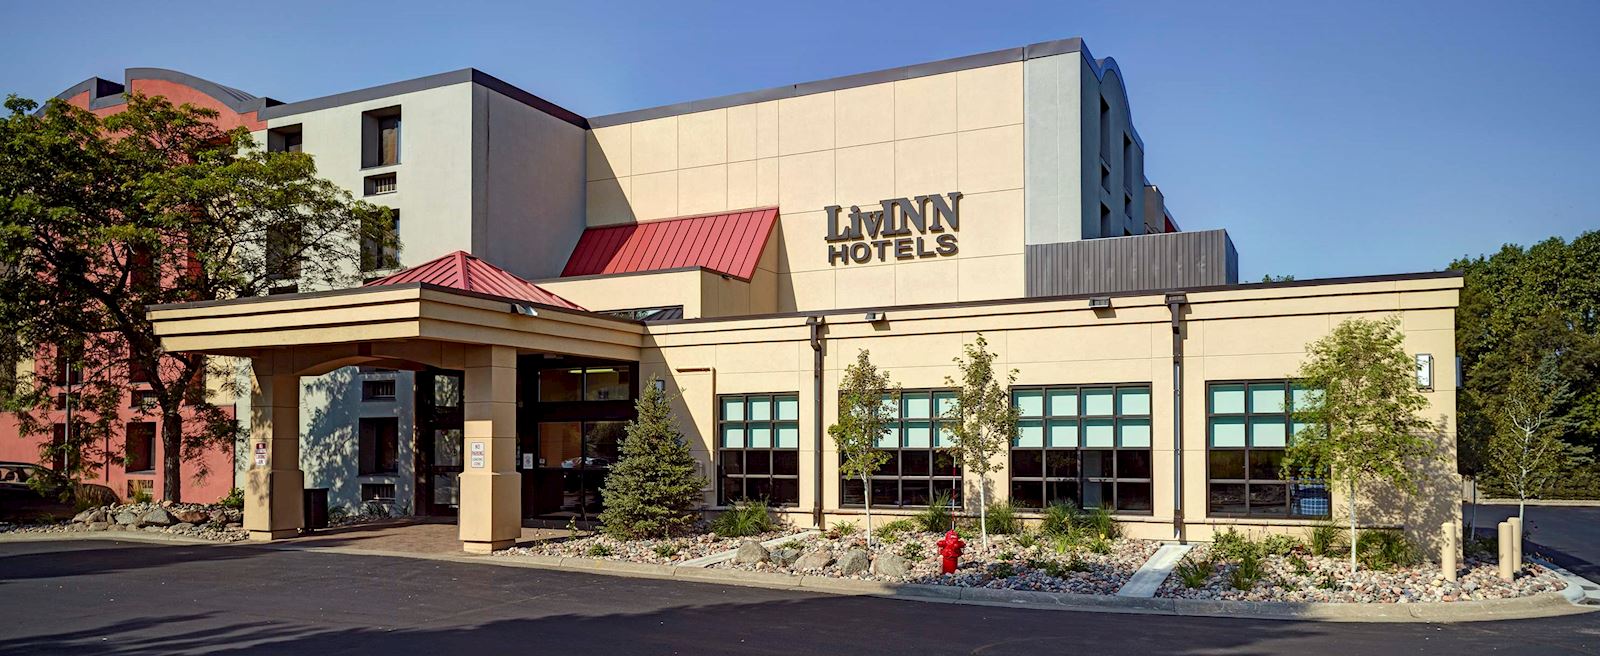 LivINN Hotels Minneapolis, Minnesota